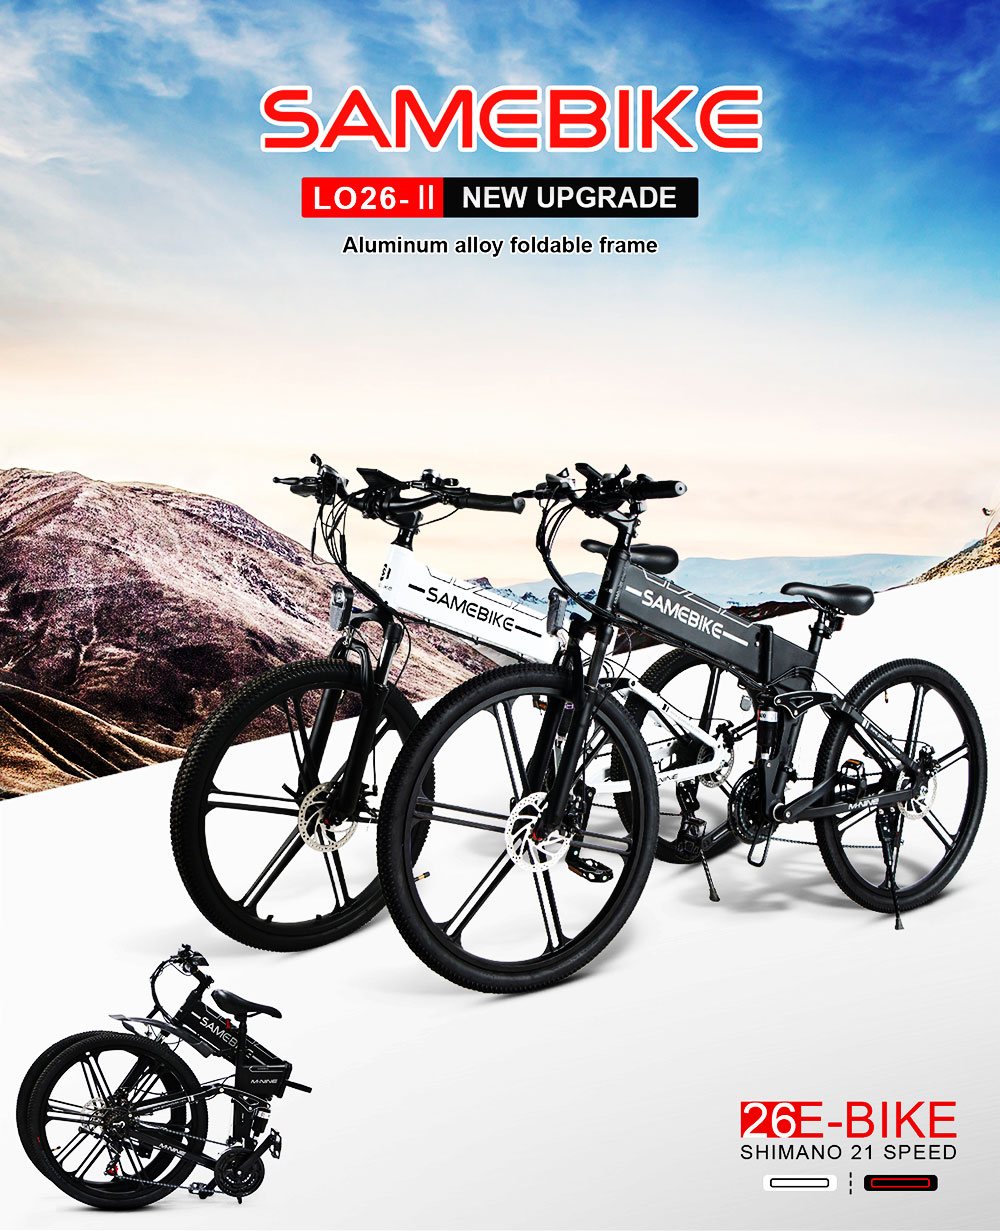 Samebike LO26 II Smart Folding Electric Moped Bike 500W Motor 10Ah Battery Max 25km/h SHIMANO 21 Gear Pure electric mode 35-40km Max range 26 Inch Magnesium Alloy Rim Wheel - Black